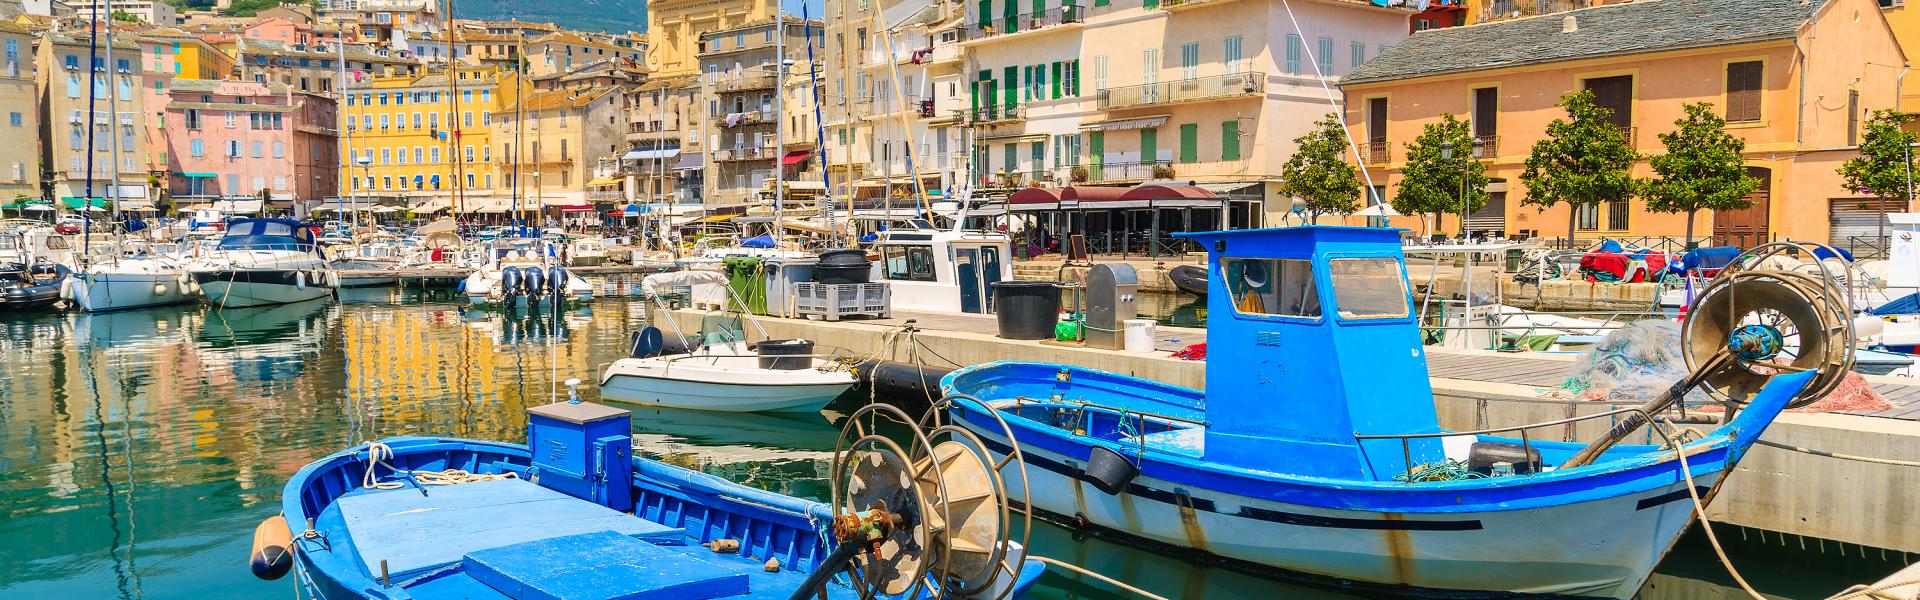 Znajdź najlepsze noclegi i apartamenty na Korsyce - Casamundo